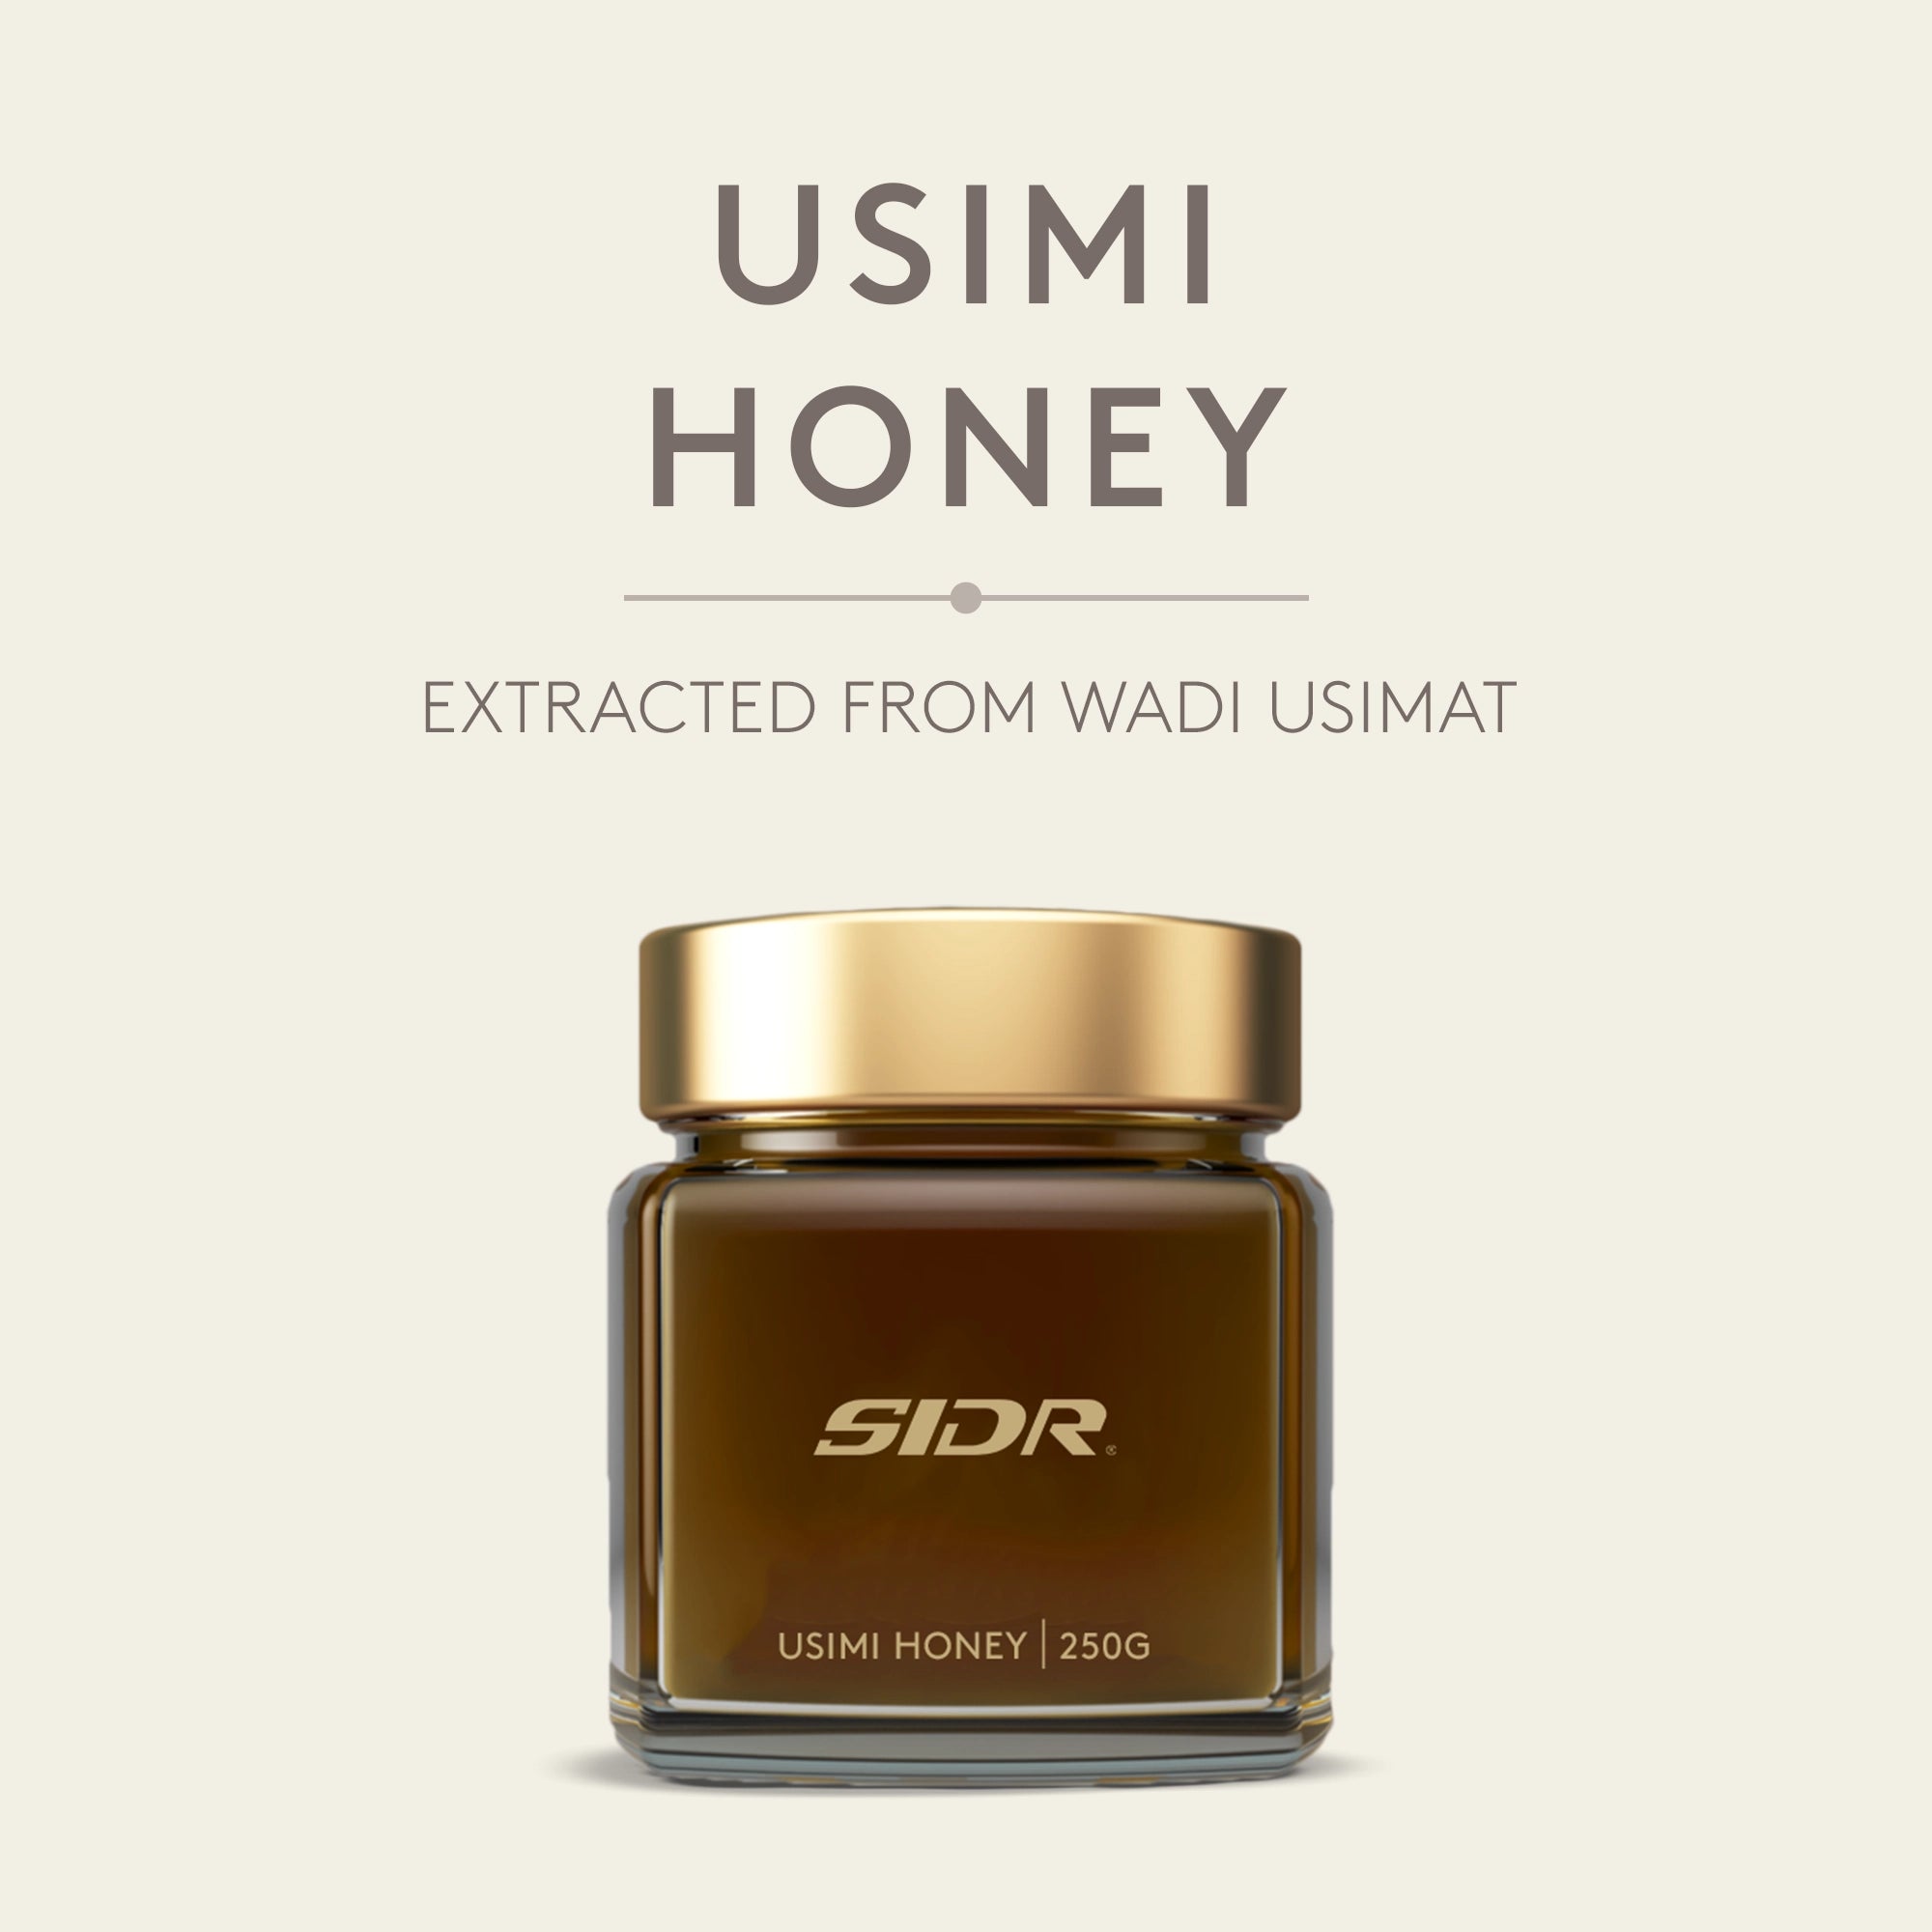 sidr usimi honey from wadi usimat